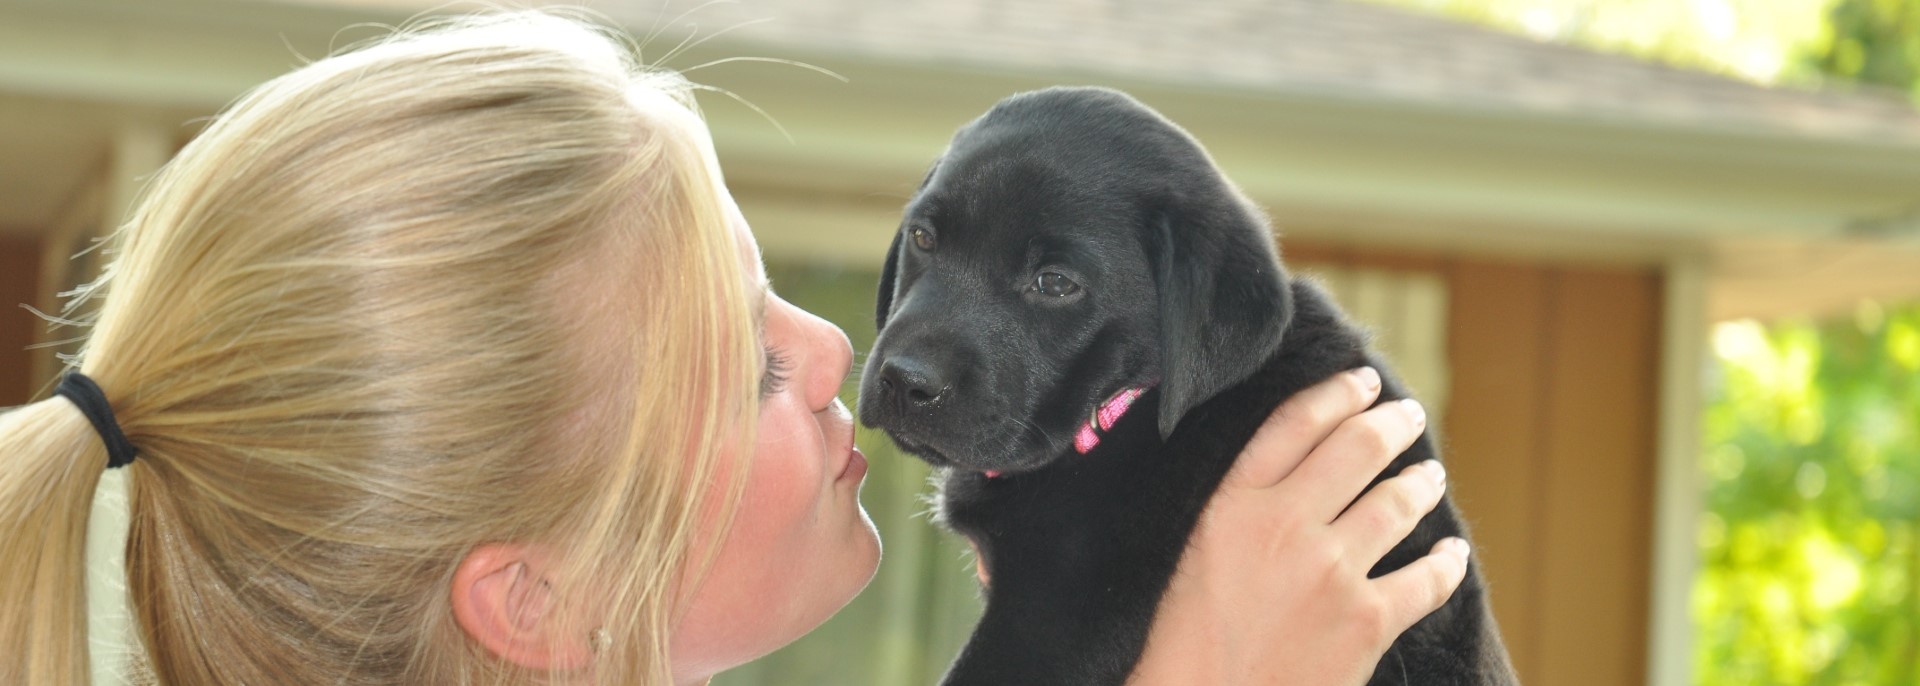 girl kissing puppy